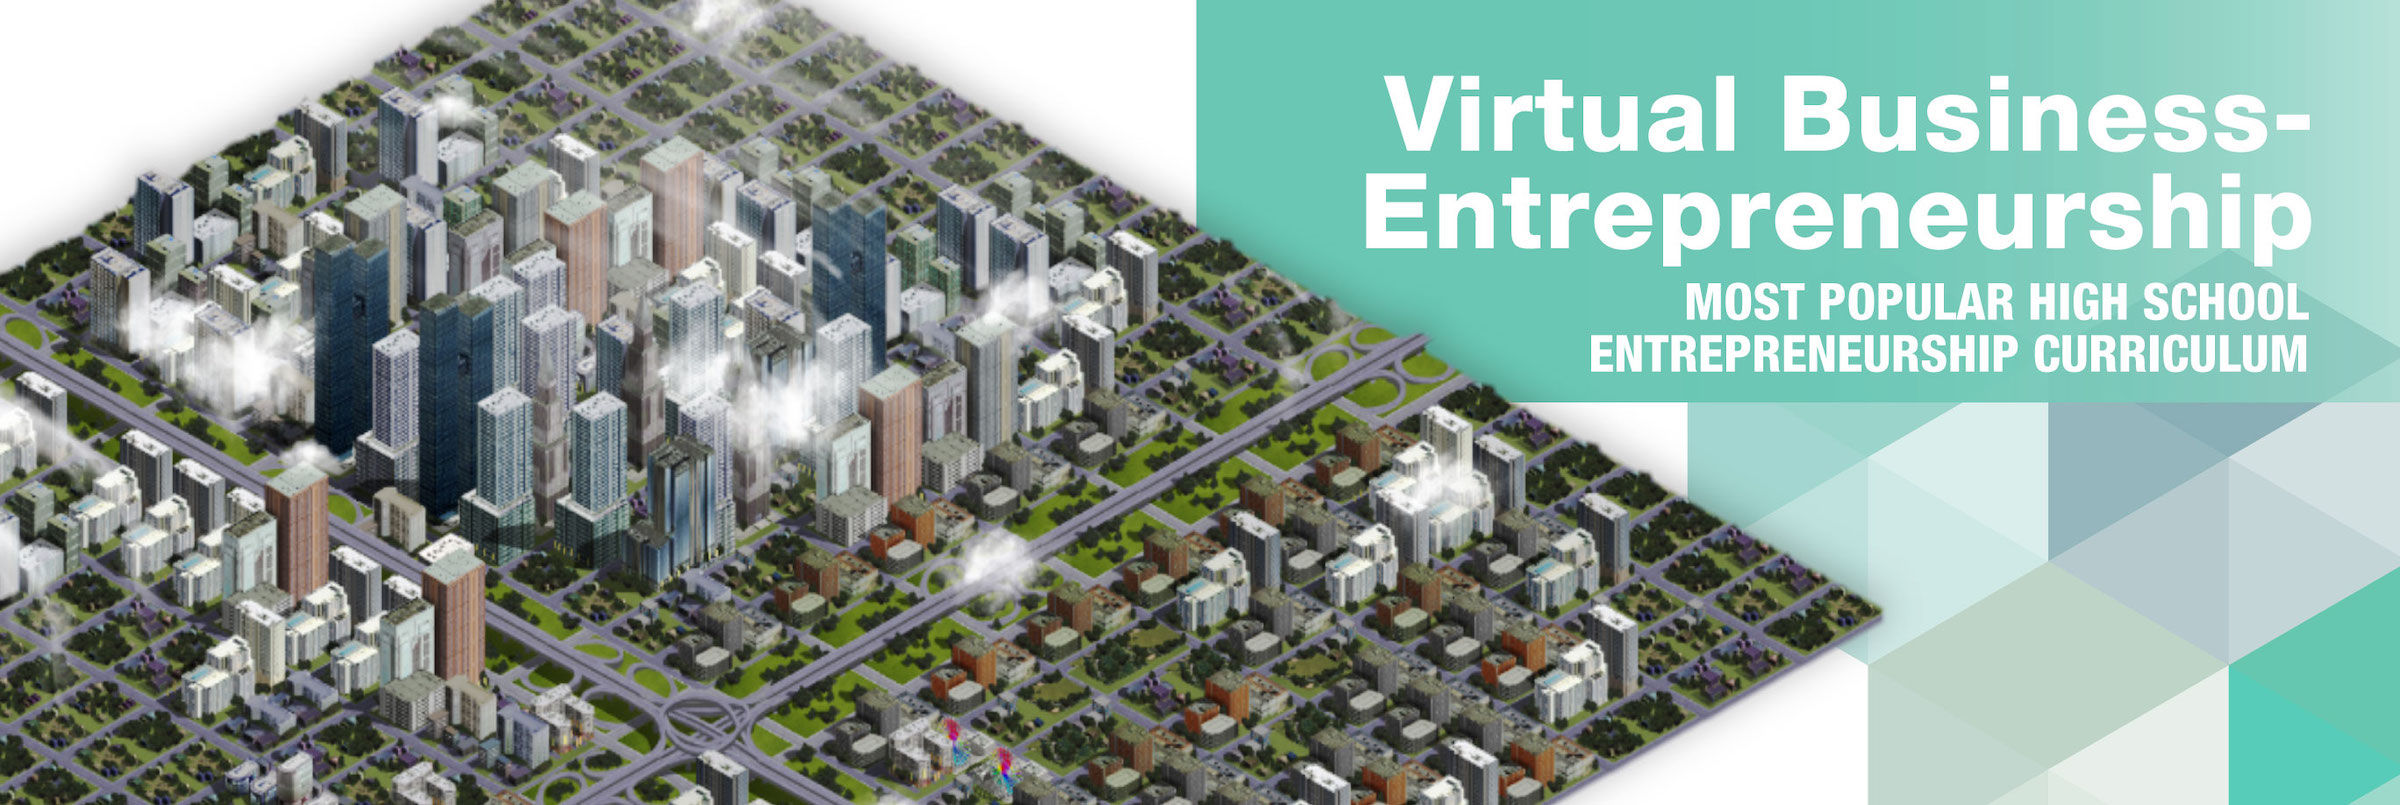 Virtual Business Entrepreneurship - entrepreneurship curriculum for teaching high school.